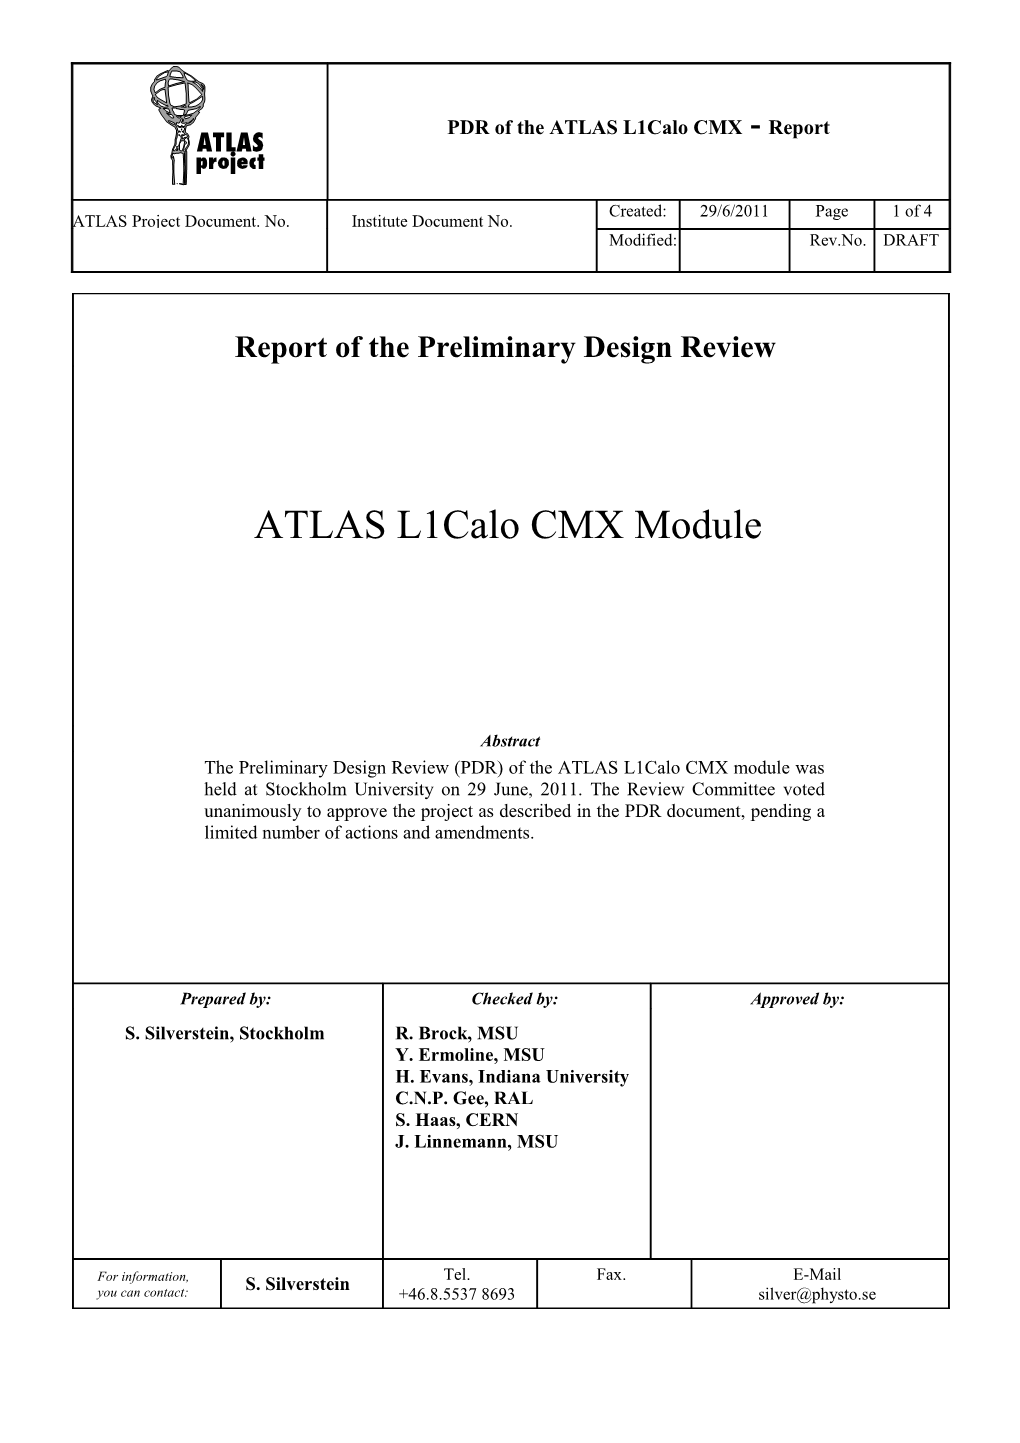 ATLAS Project Document